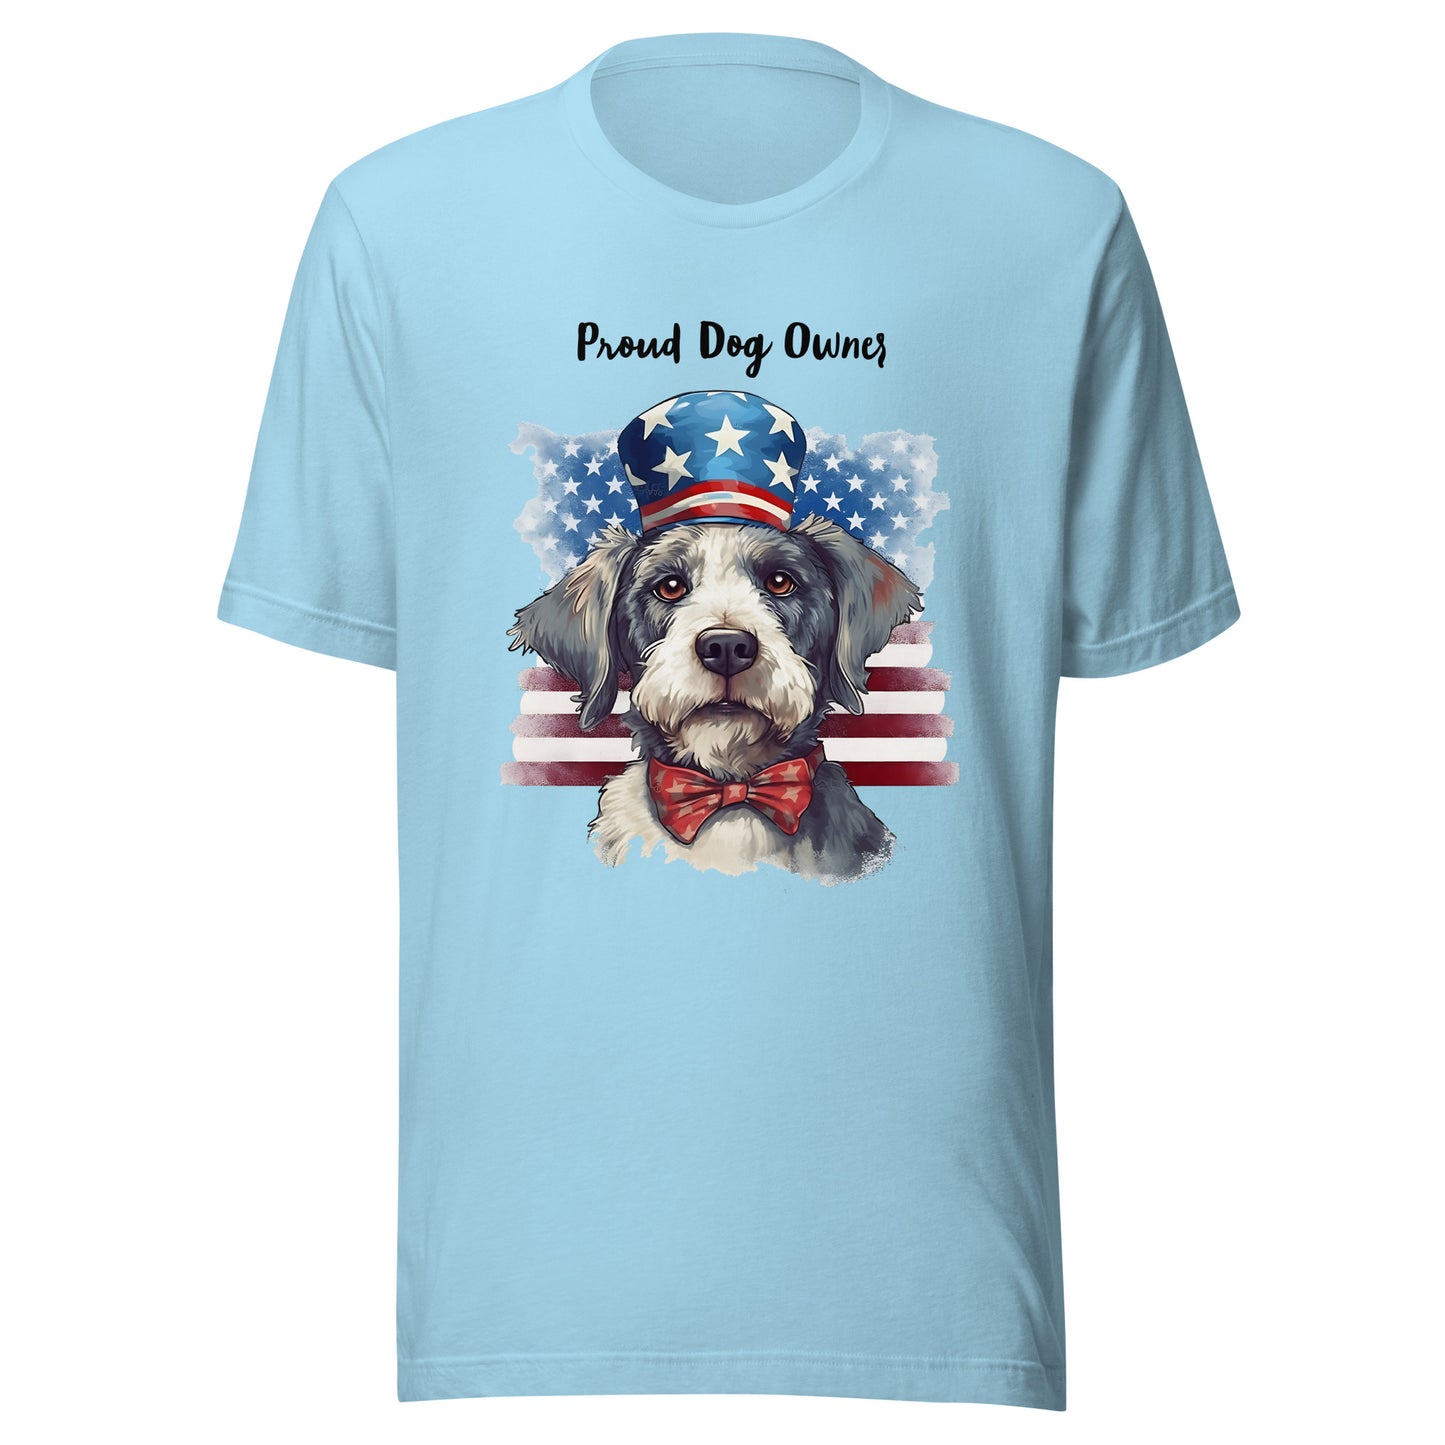 Patriotic Dog Tibetan Terrier Blue T-Shirt For Proud Dog Owner